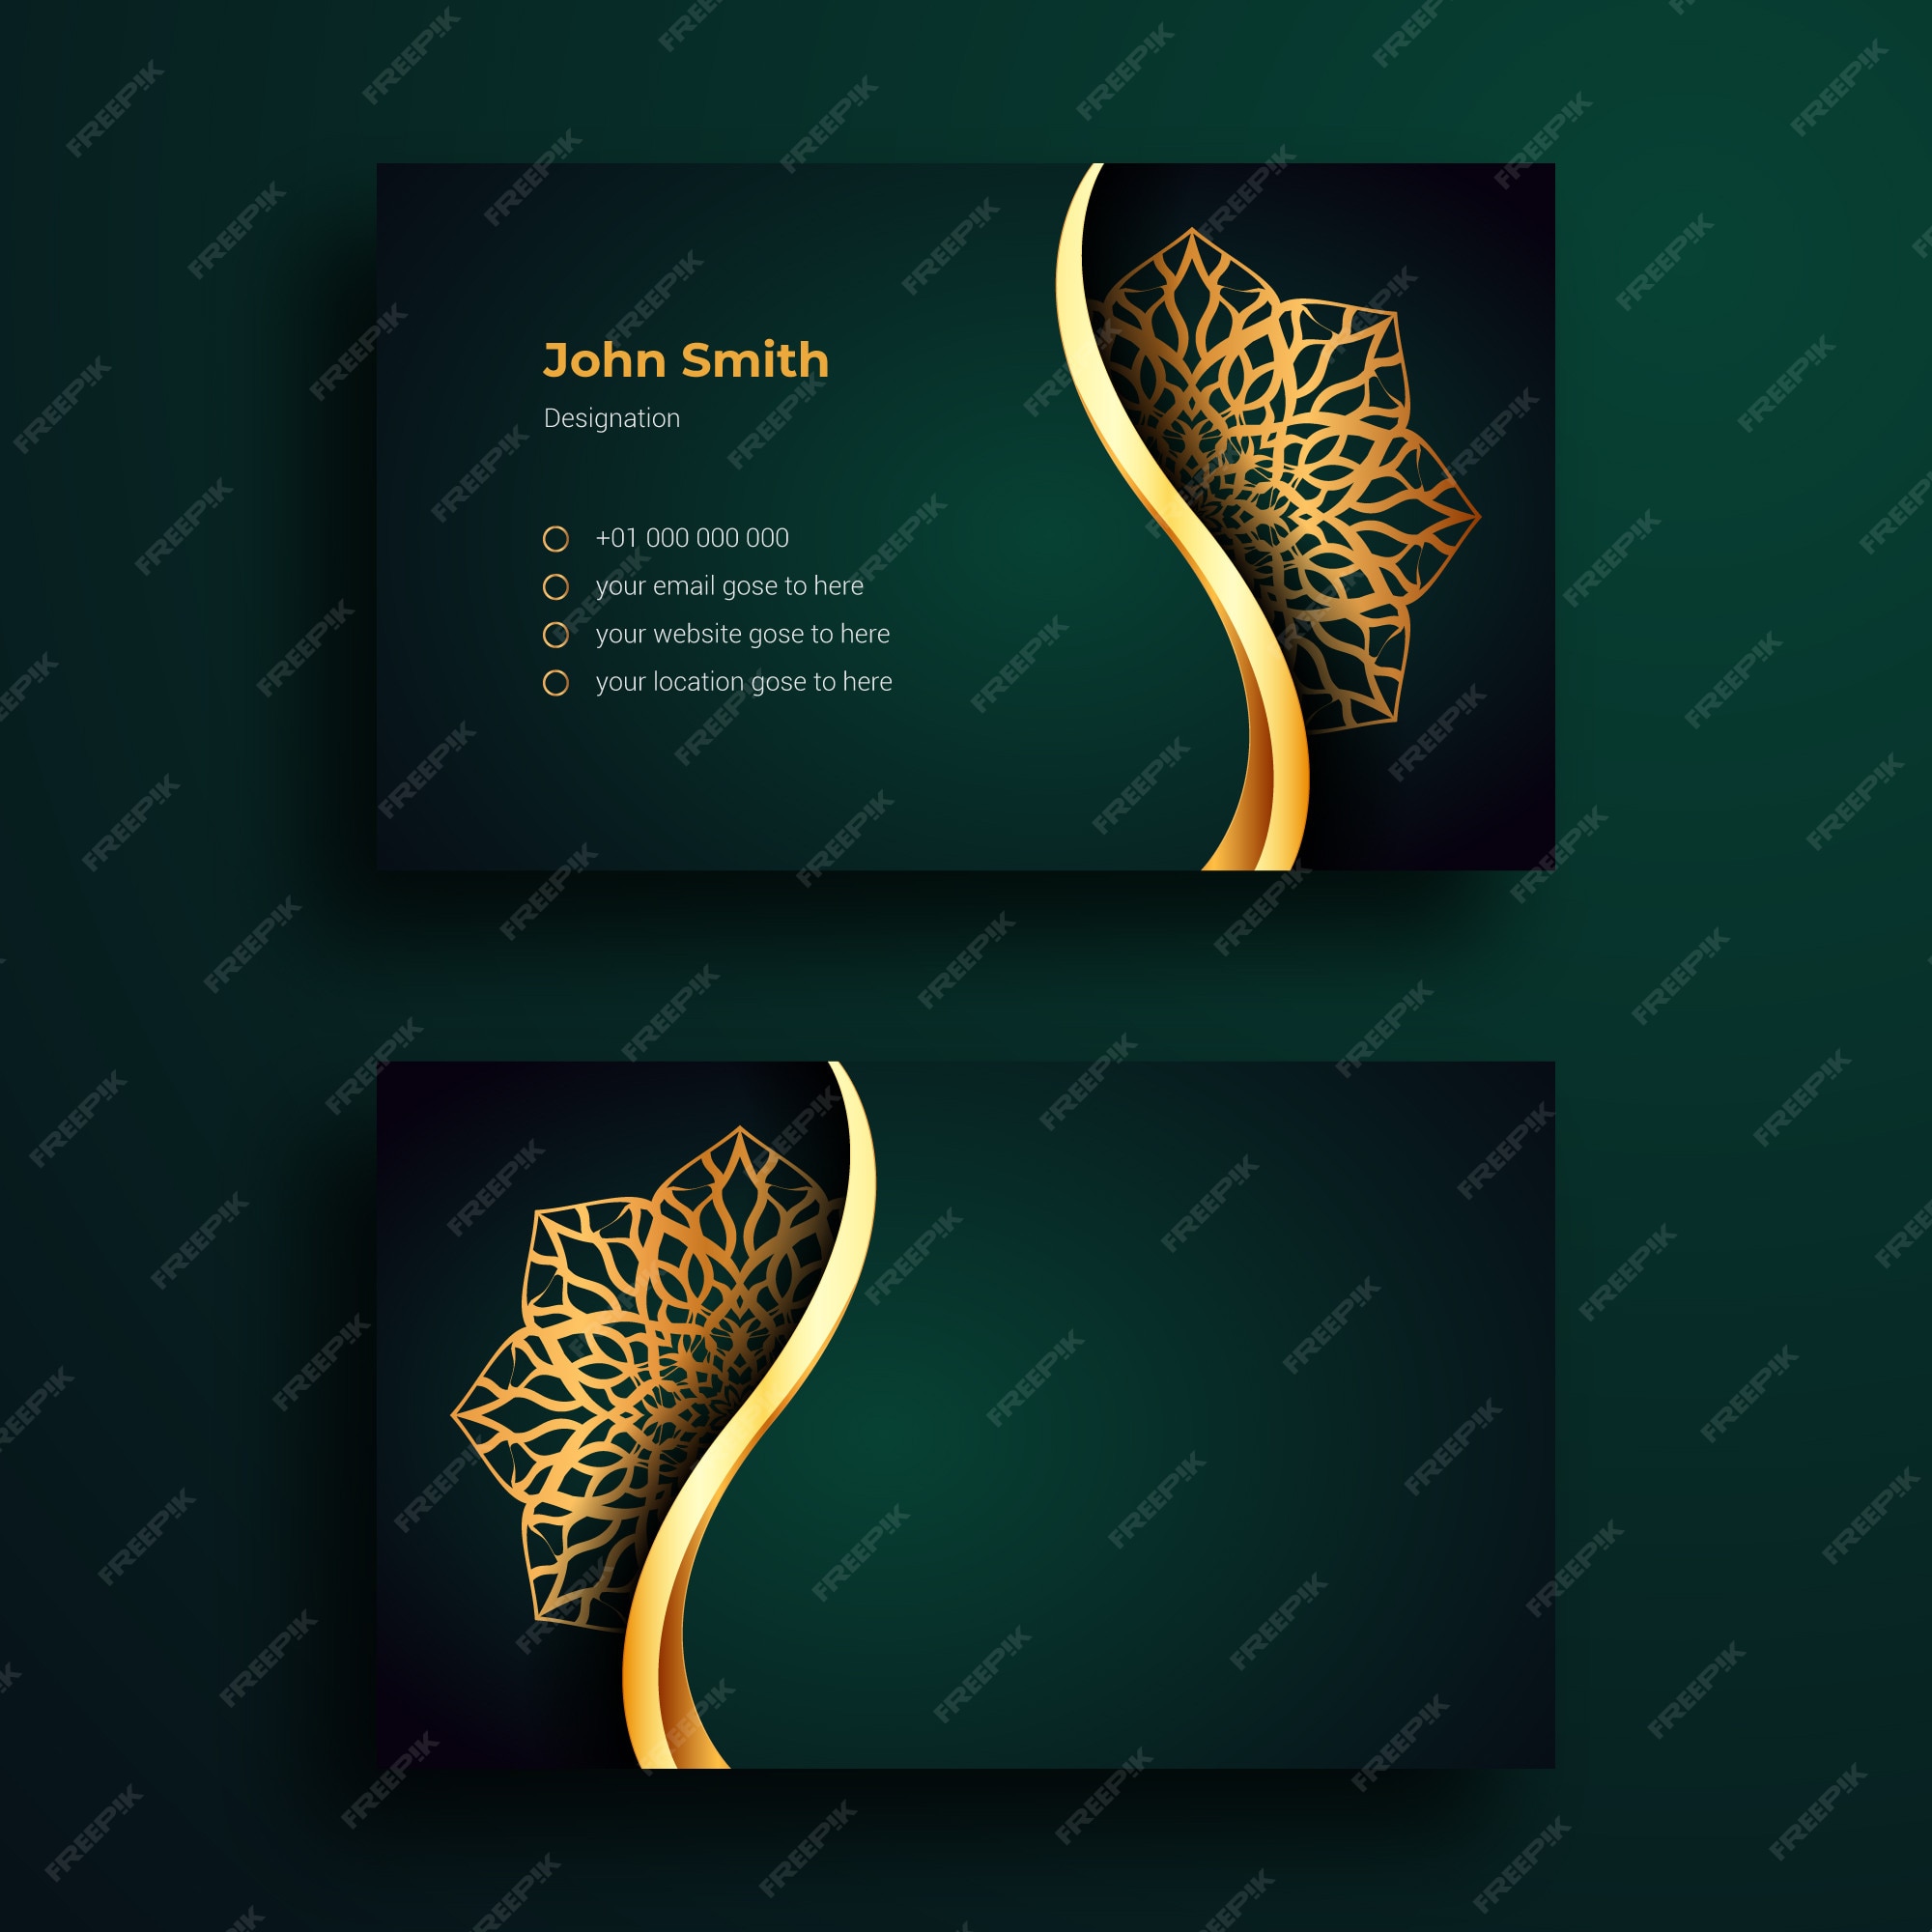 Premium Vector | Business card template with mandala arabesque design